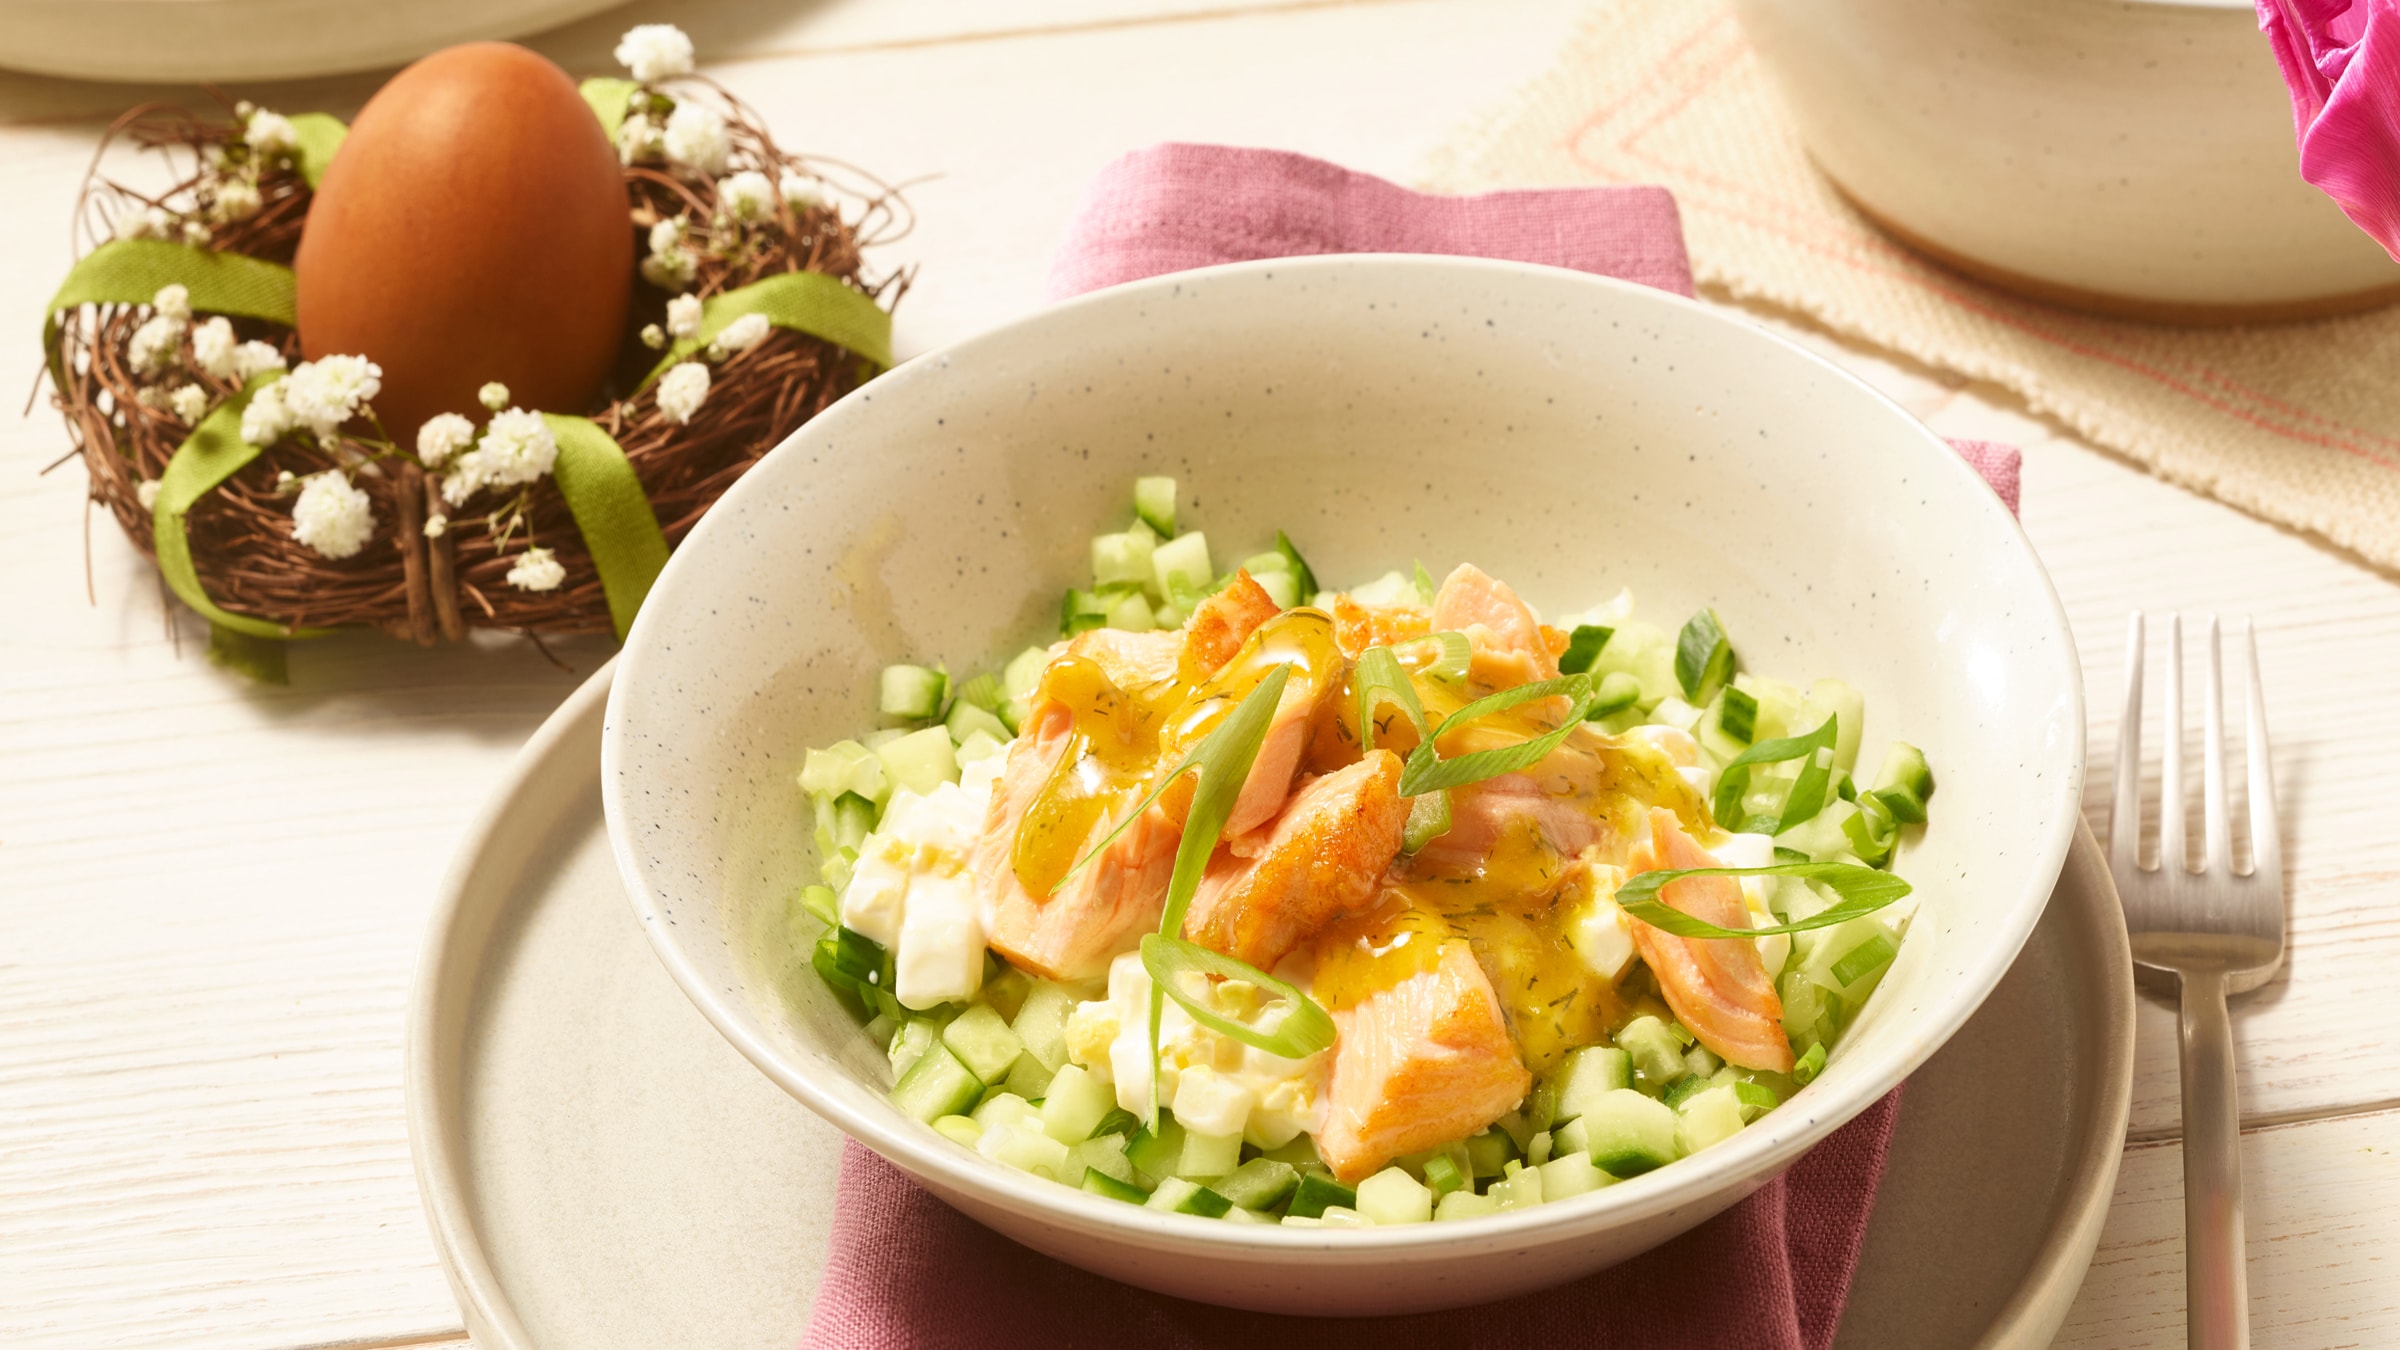 Lachs-Eier-Salat mit Honig-Senf-Dressing Rezept selbst machen | Alnatura